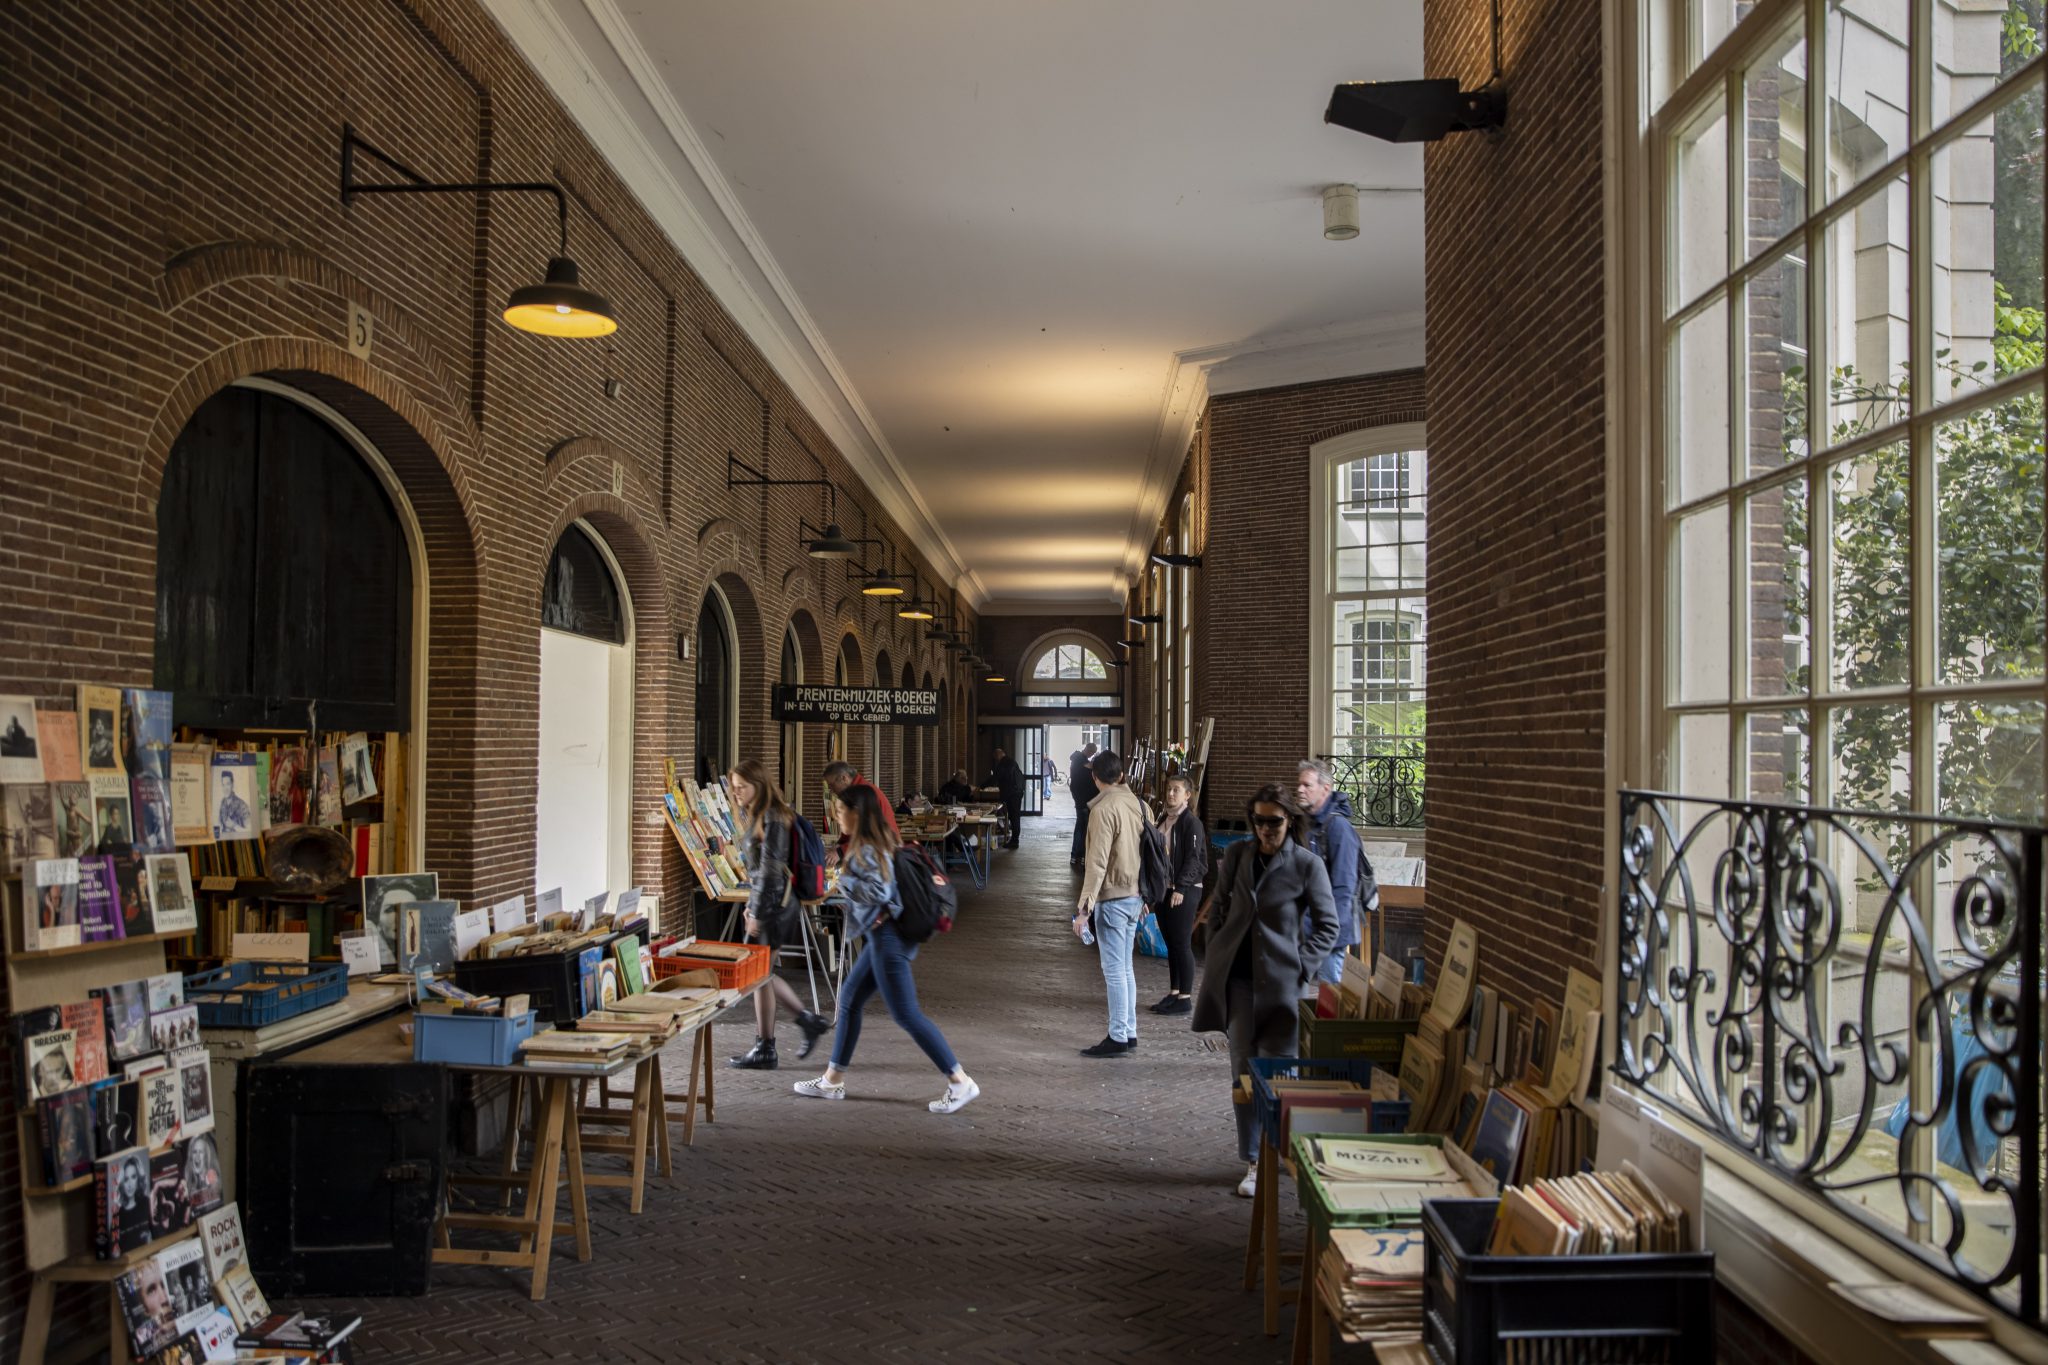 (C) Universiteit van Amsterdam